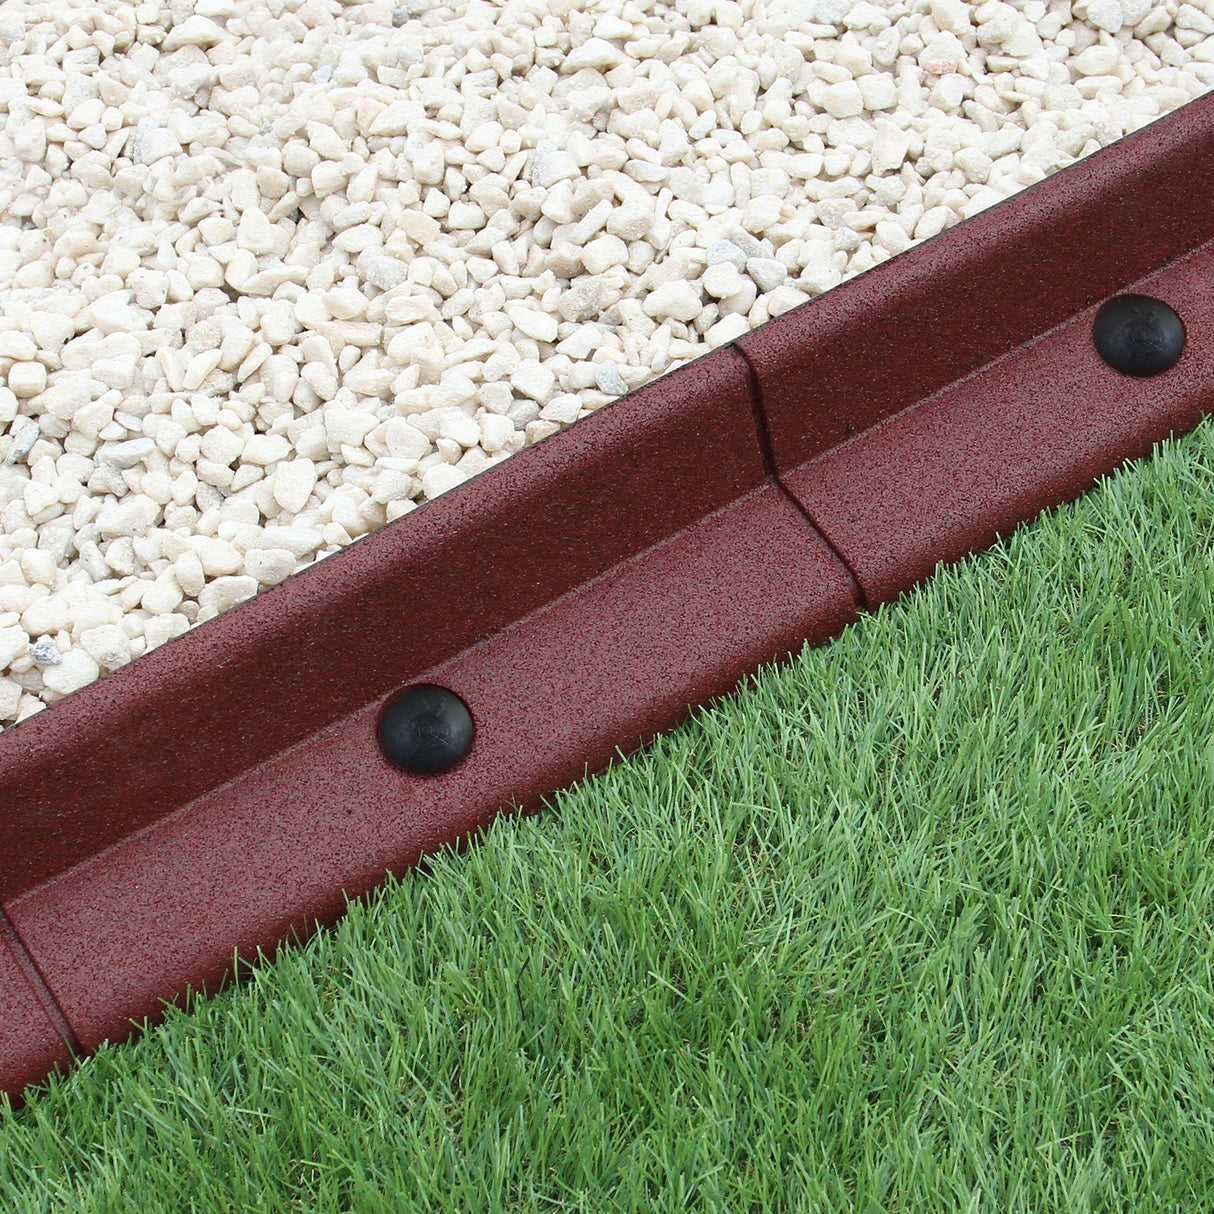 Flexible Lawn Edging Terracotta 1.2m x 26